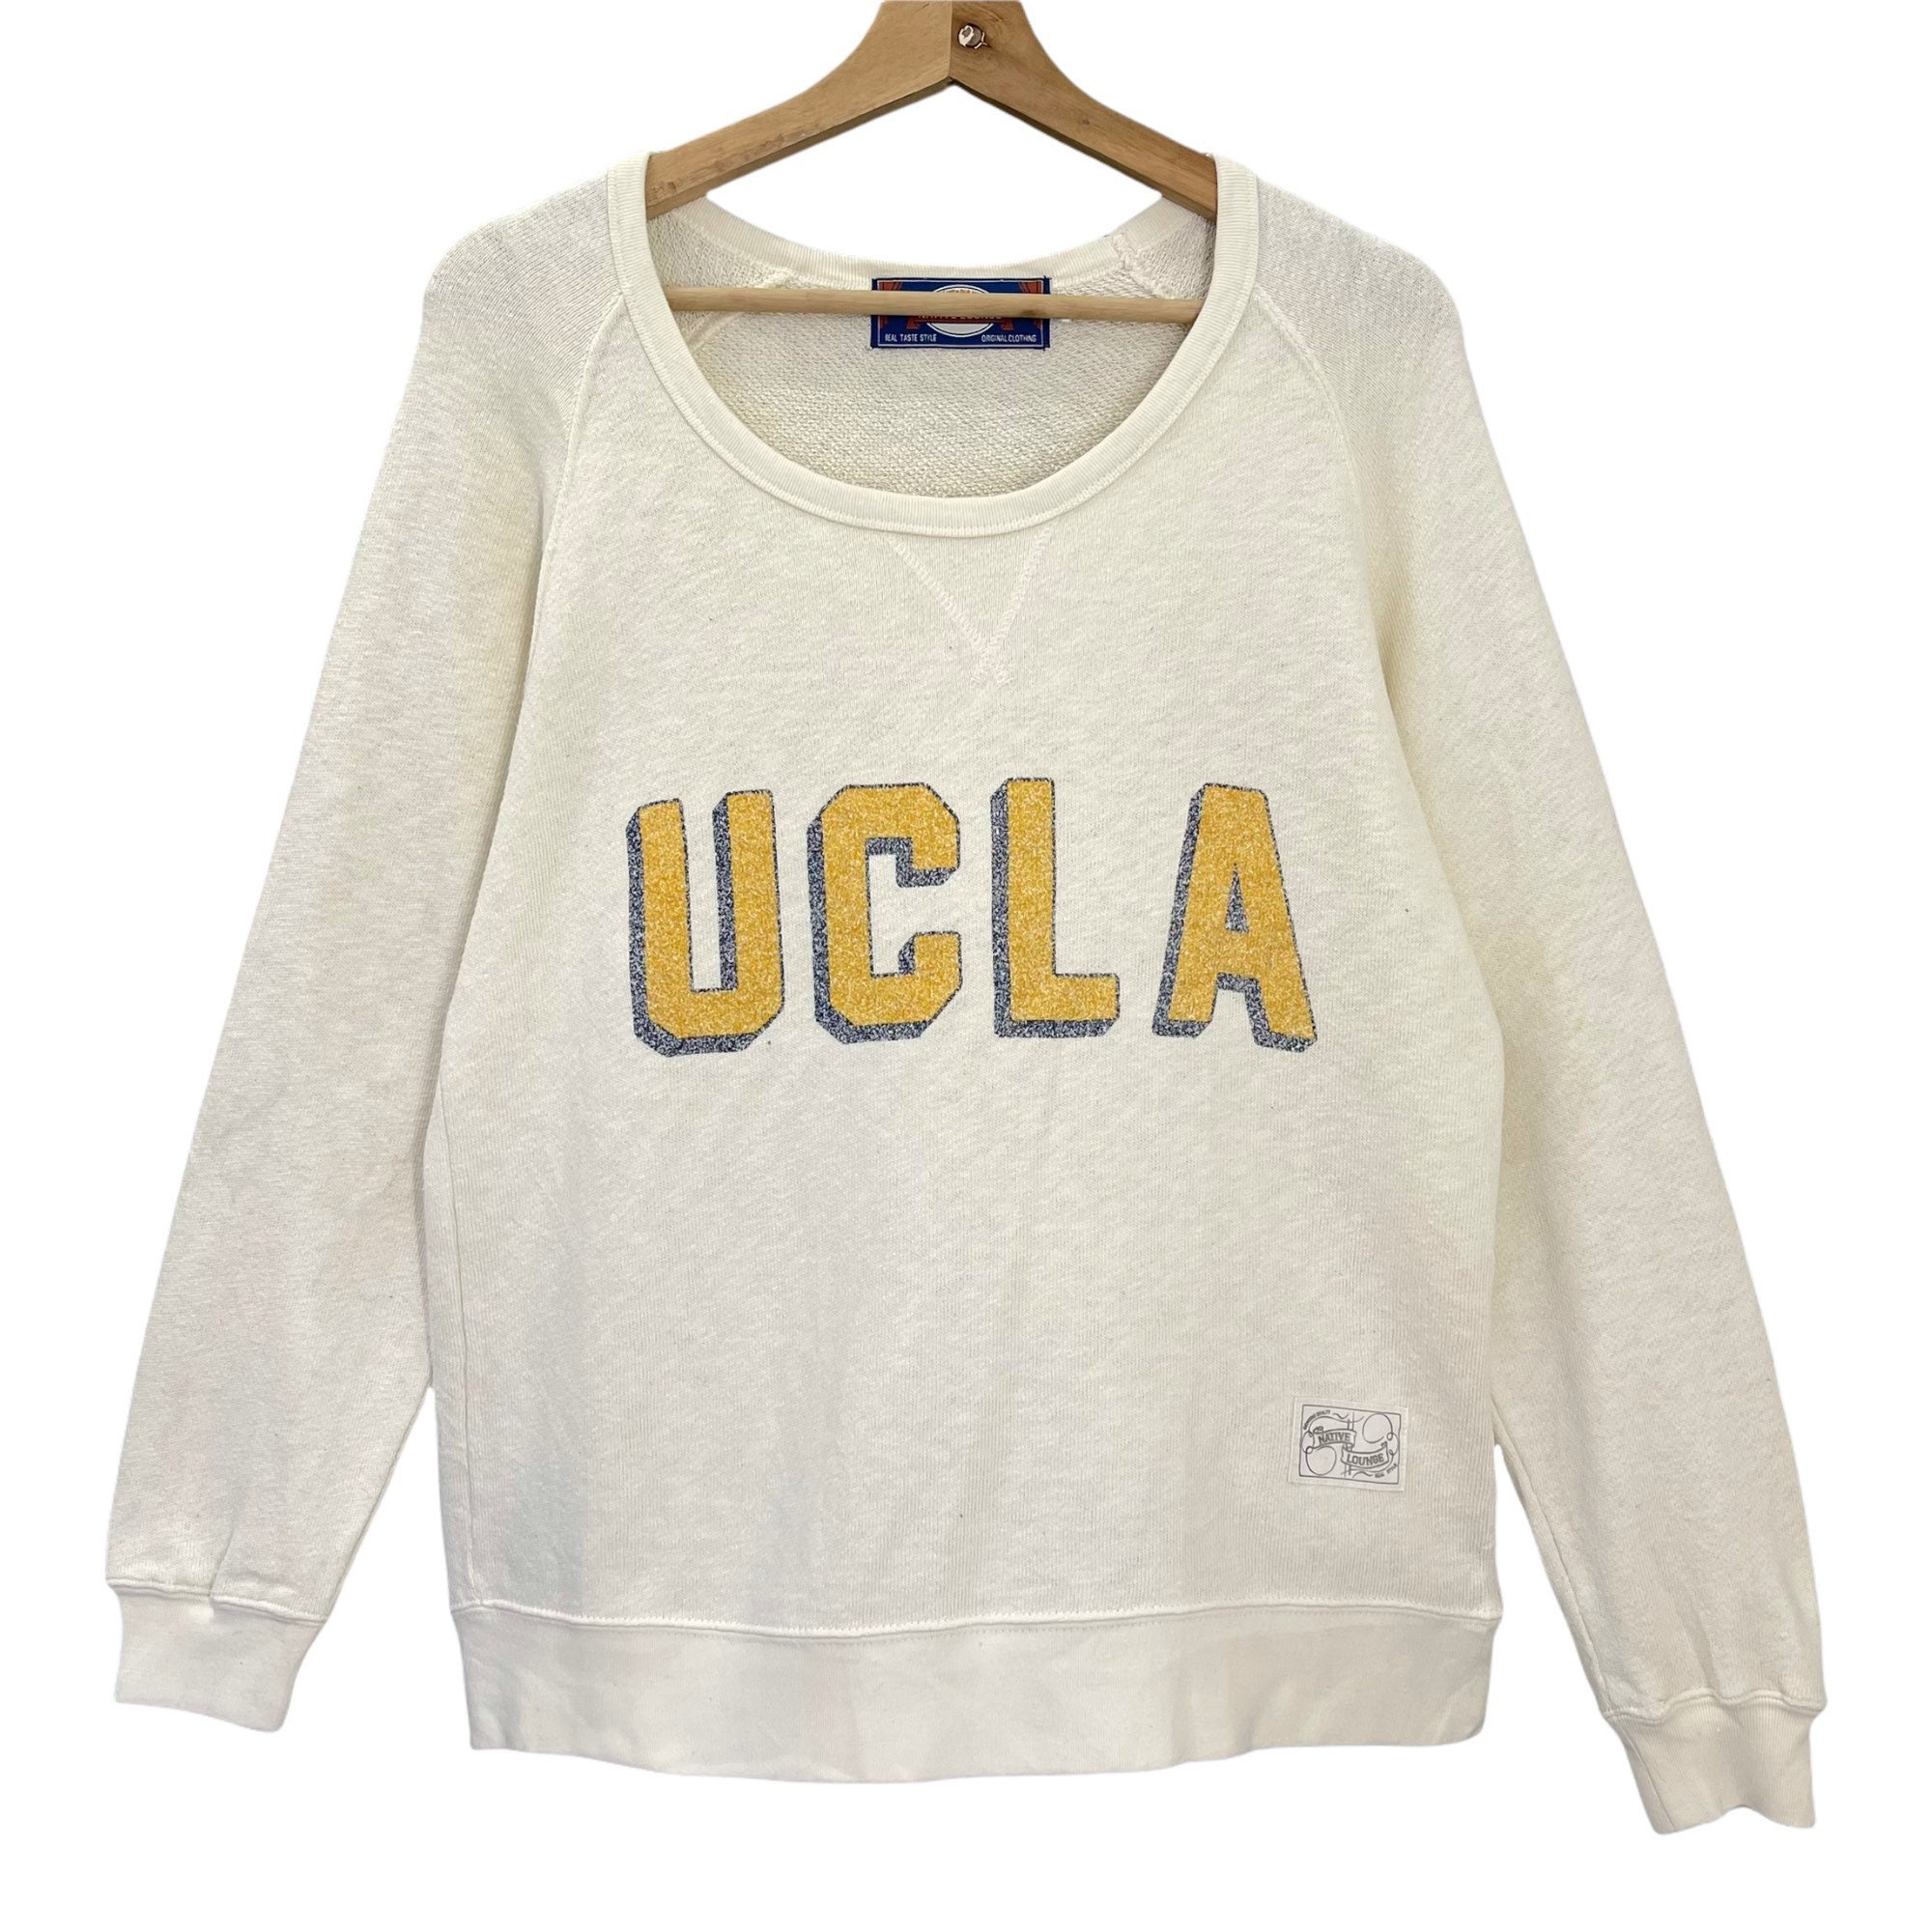 H&M UCLA sweatshirt  Sweatshirts, Ucla sweatshirt, Clothes design